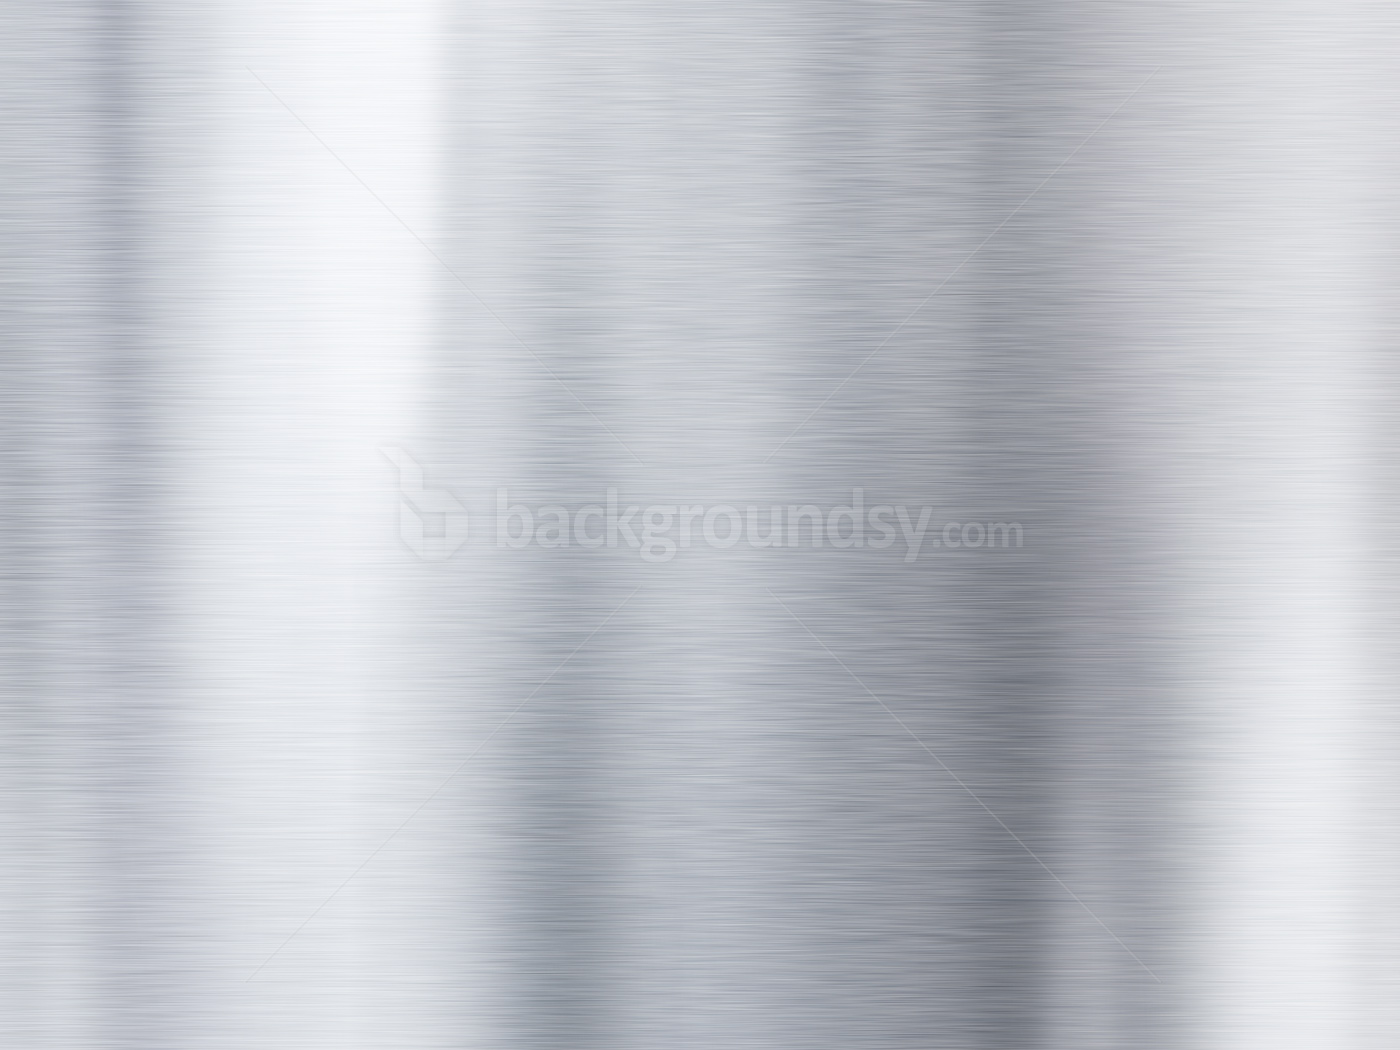 Silver background Backgroundsycom